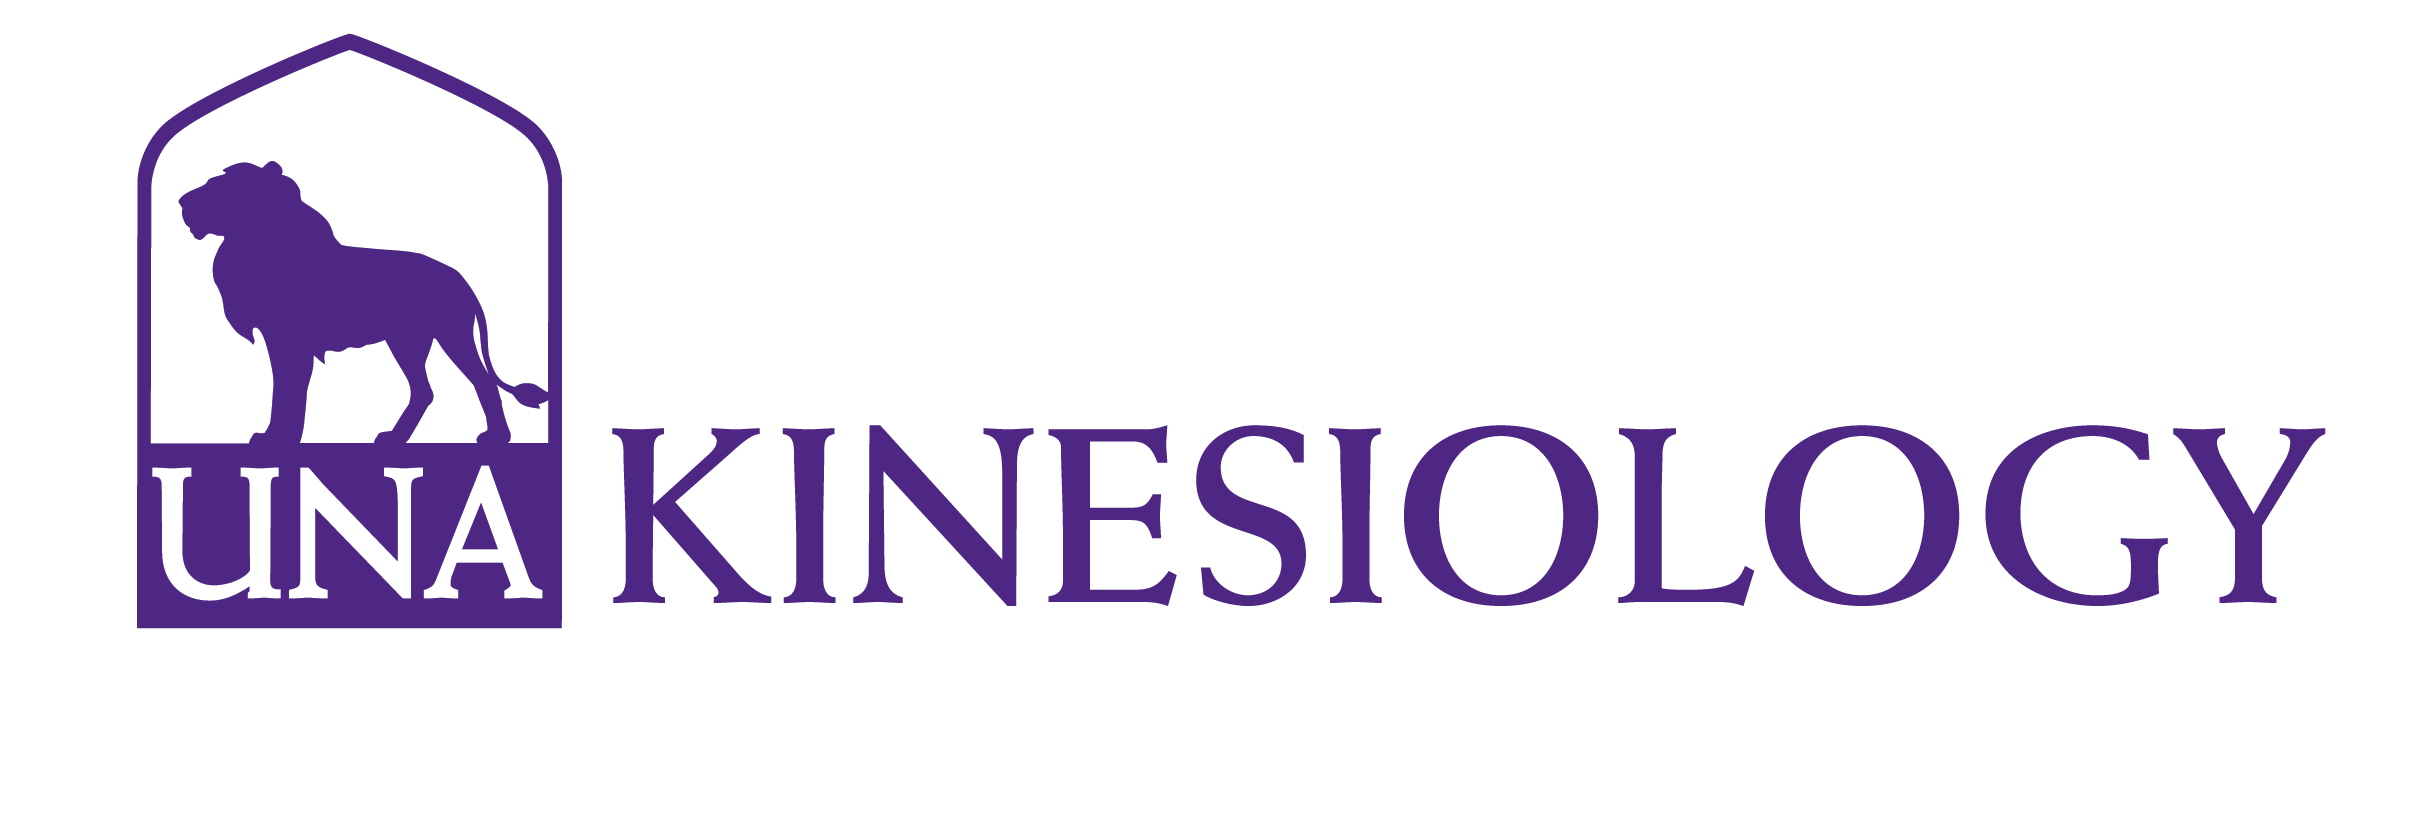 kinesiology logo 3